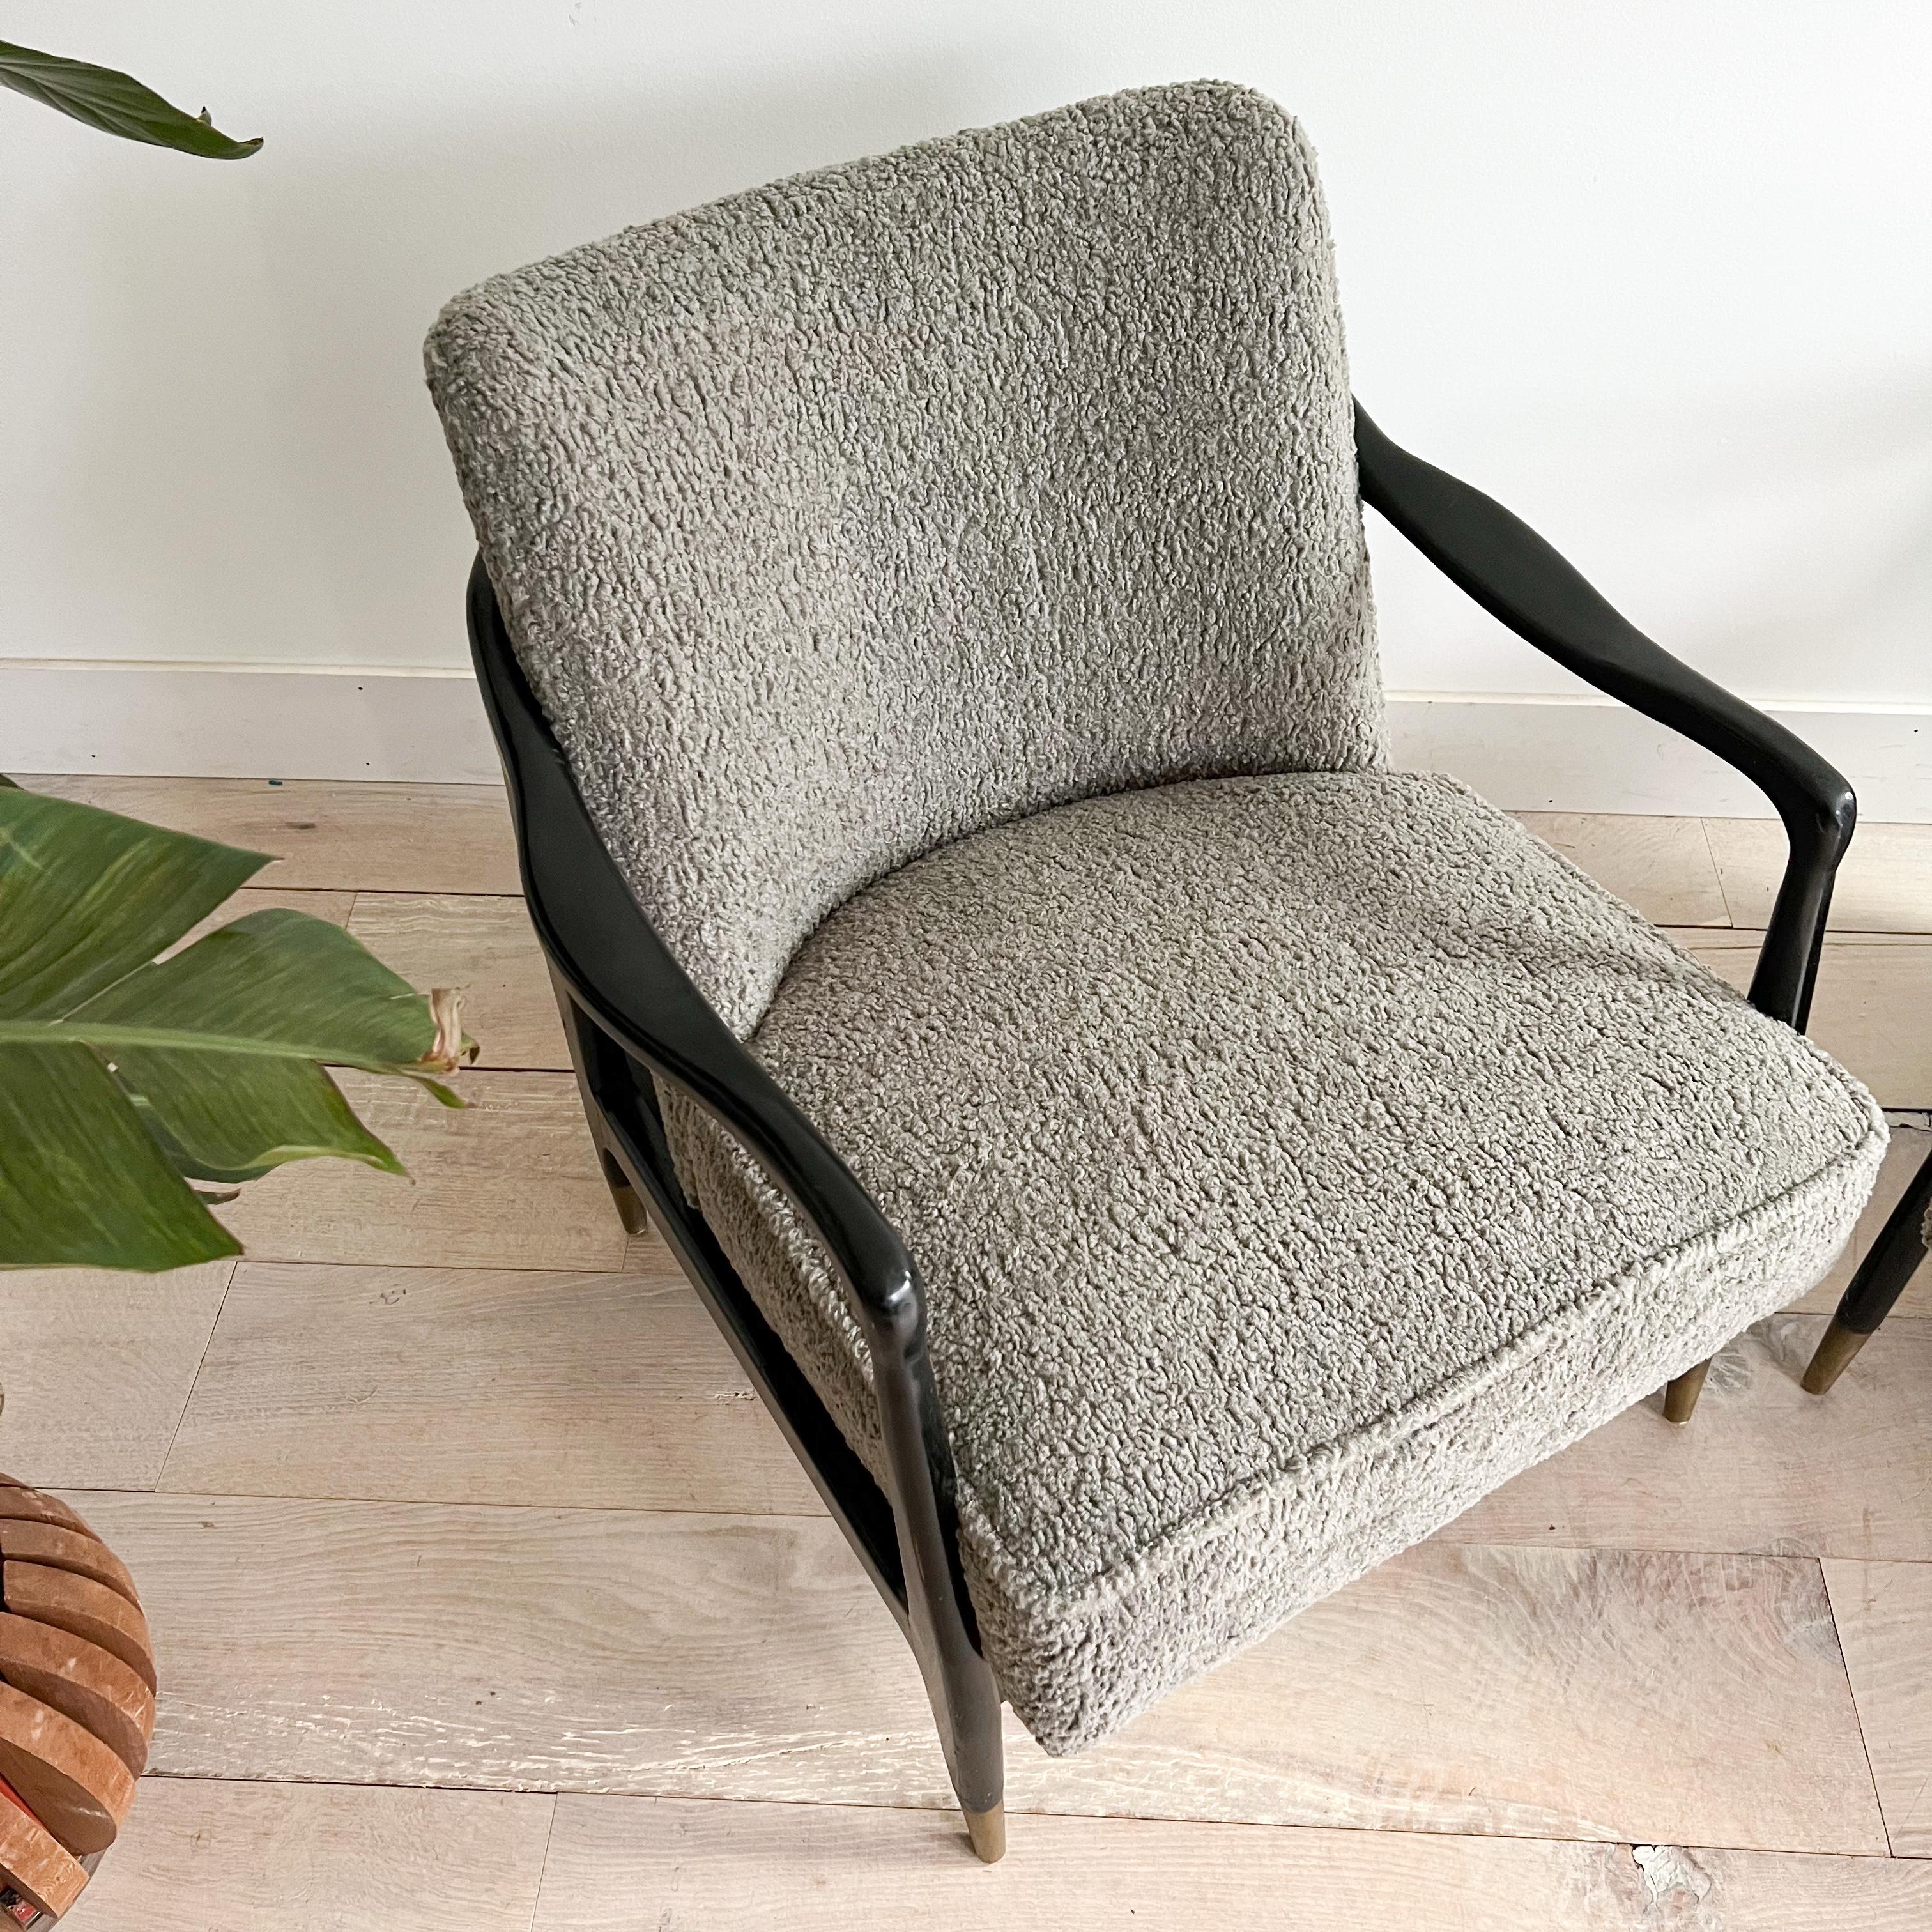 Pair of Mid-Century Modern Lounge Chairs - Gio Ponti Style 3